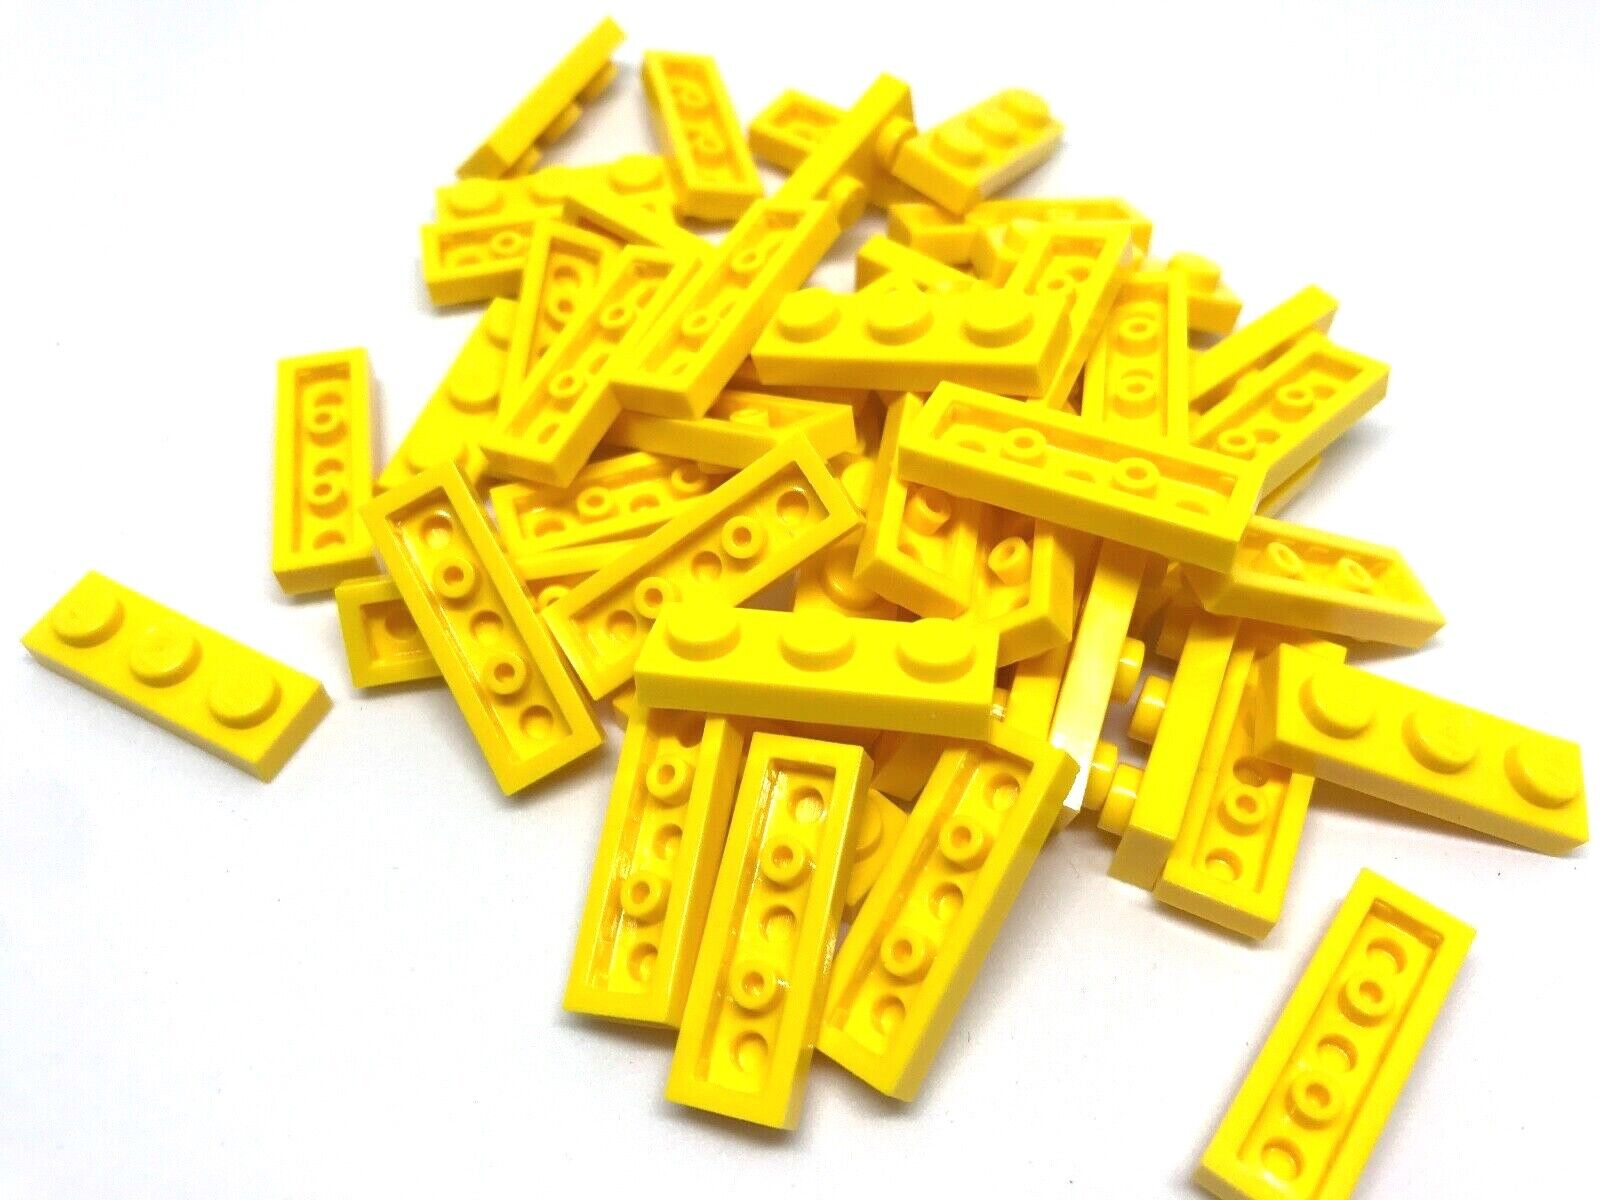 1X3 Lego 50 Piece Bulk Lot 1 x 3 Flat Plates YELLOW Building Parts #3623 LEGO Does Not Apply